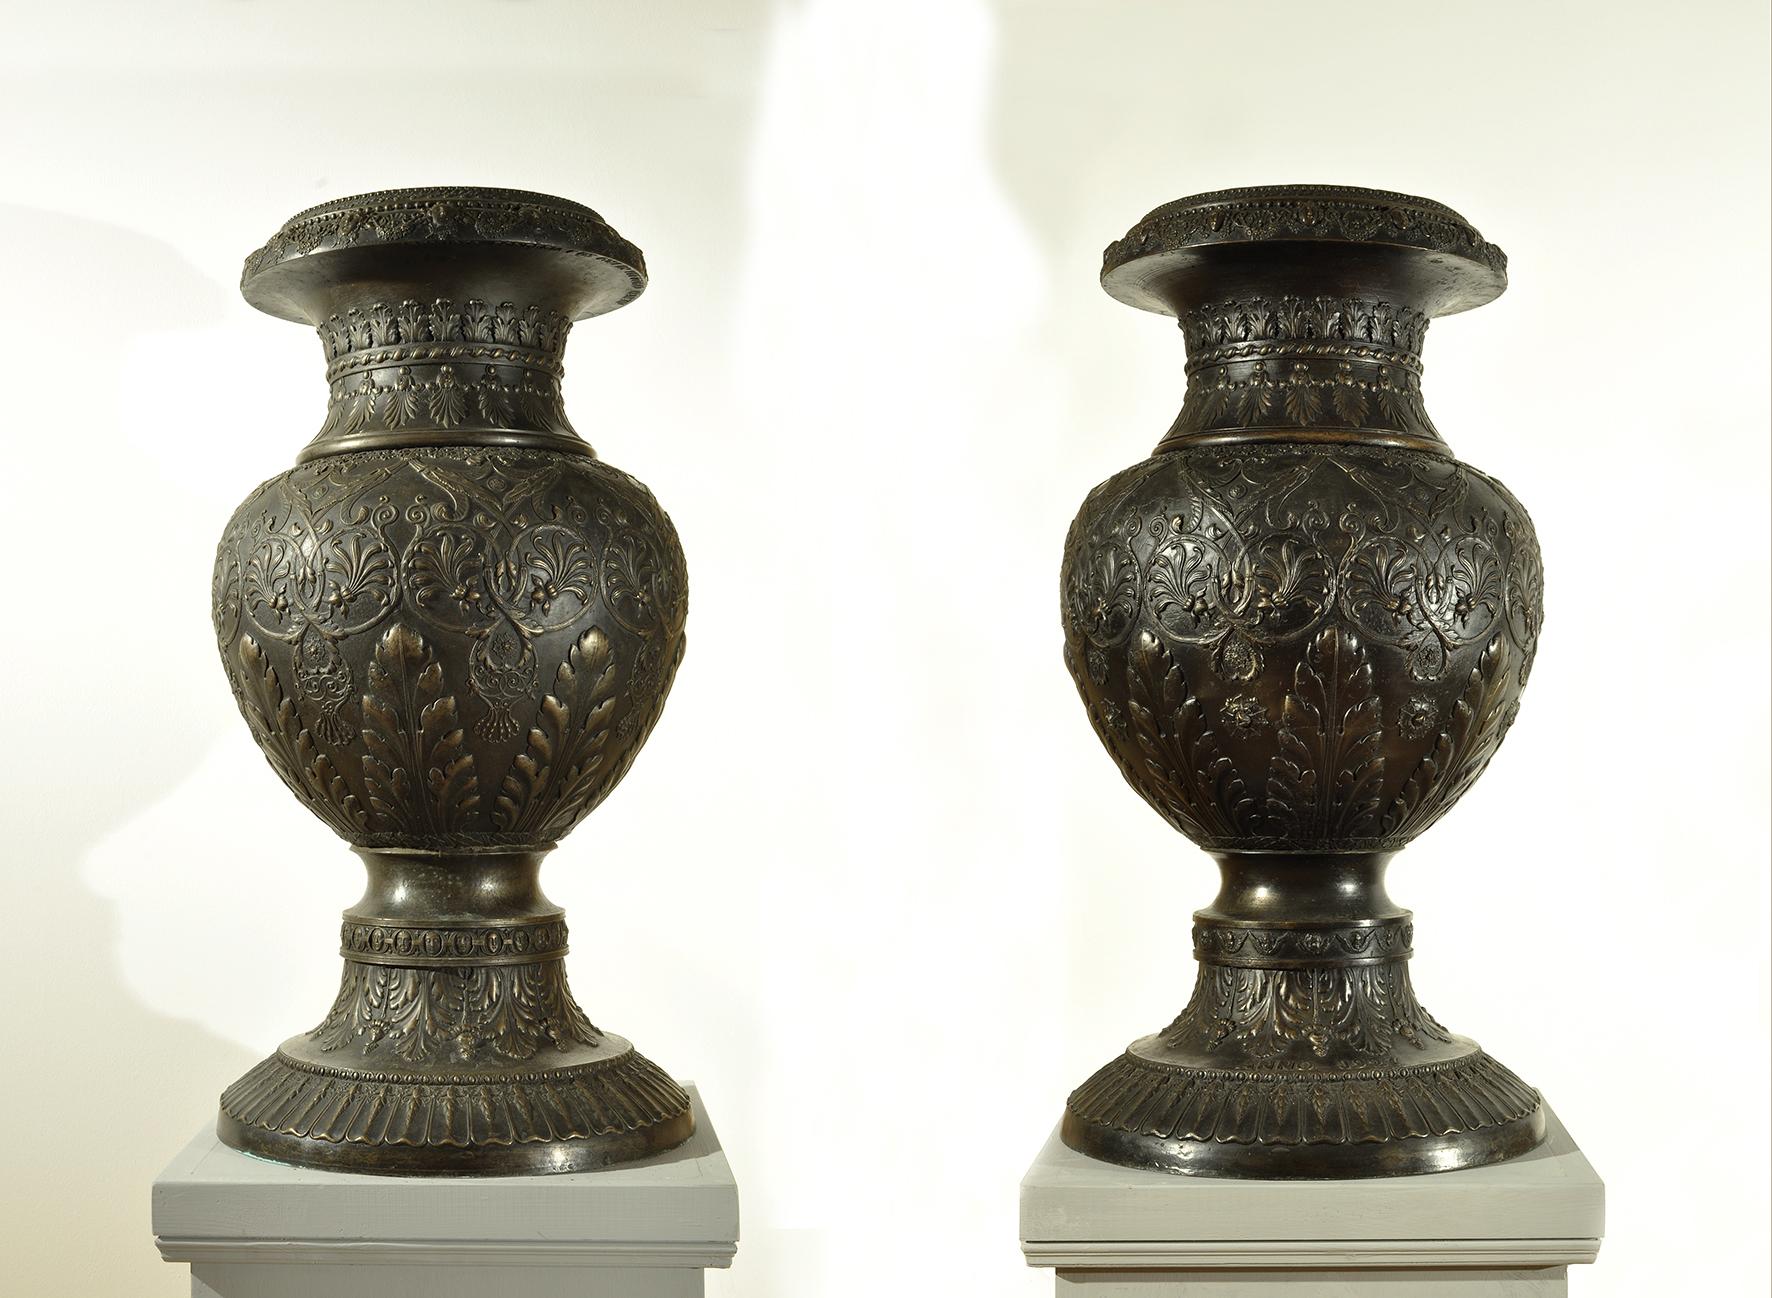 PREMIATA FONDERIA F.lli DE POLI VITTORIO VENETO Figurative Sculpture - Pair of large decorative vases, 1927